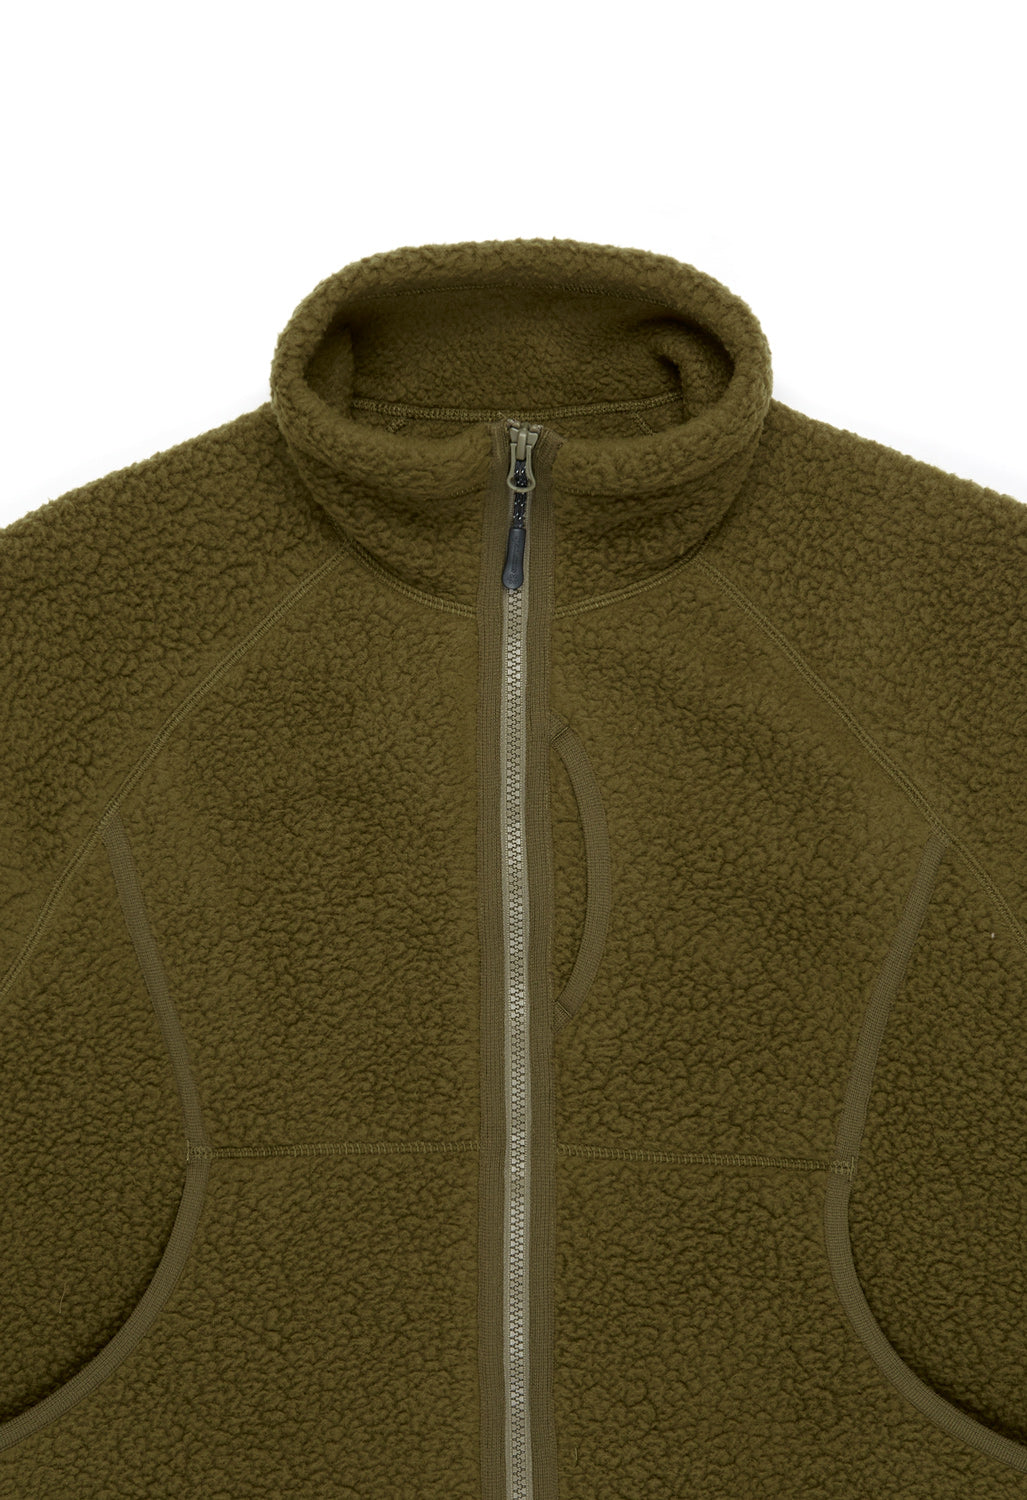 Snow Peak Men's Thermal Boa Fleece Jacket - Olive